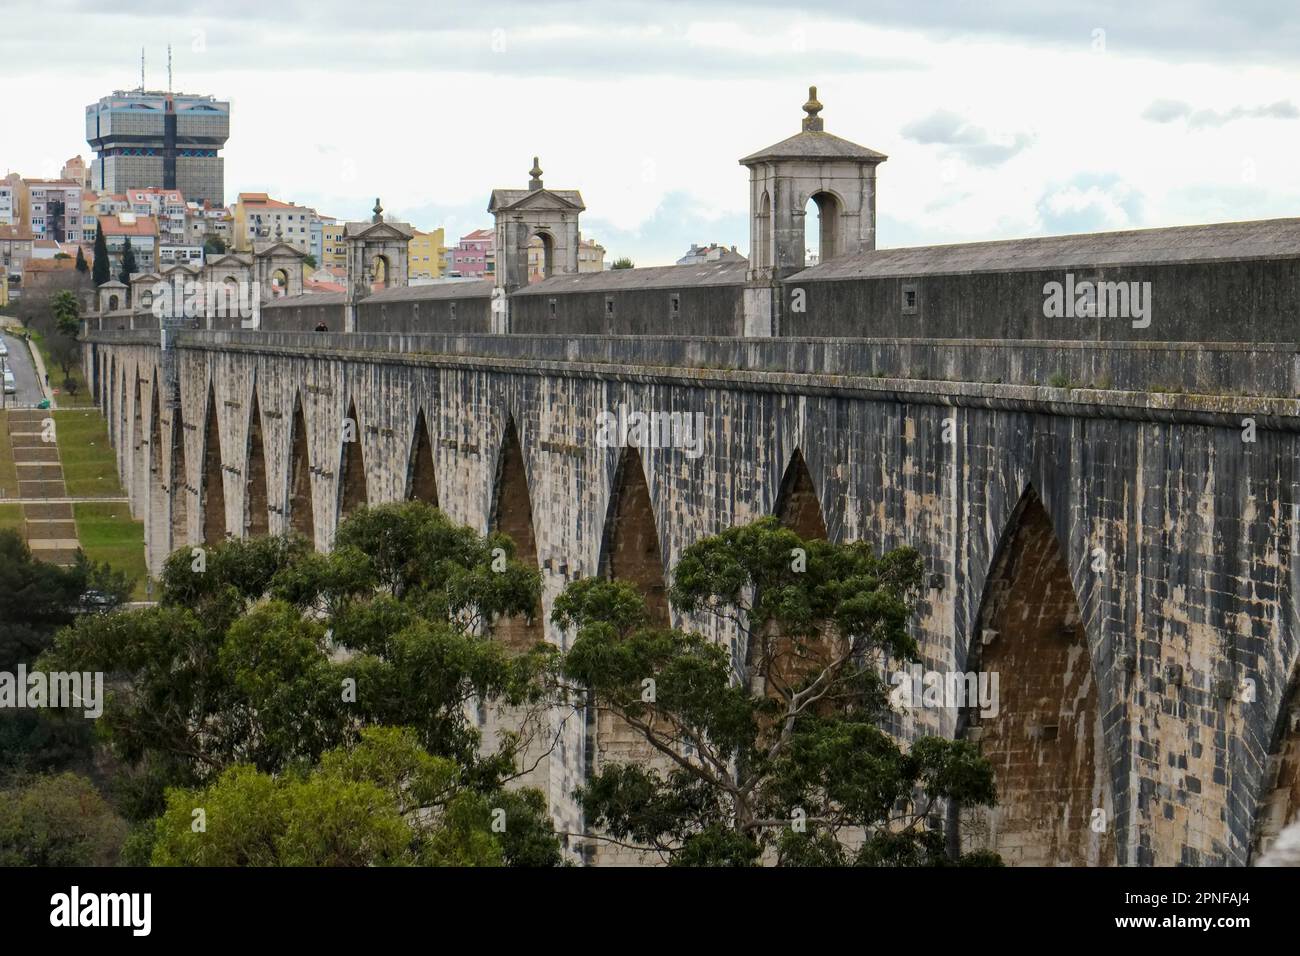 Portugal, Lisbon, Roman style aqueduct built in 1748 Stock Photo